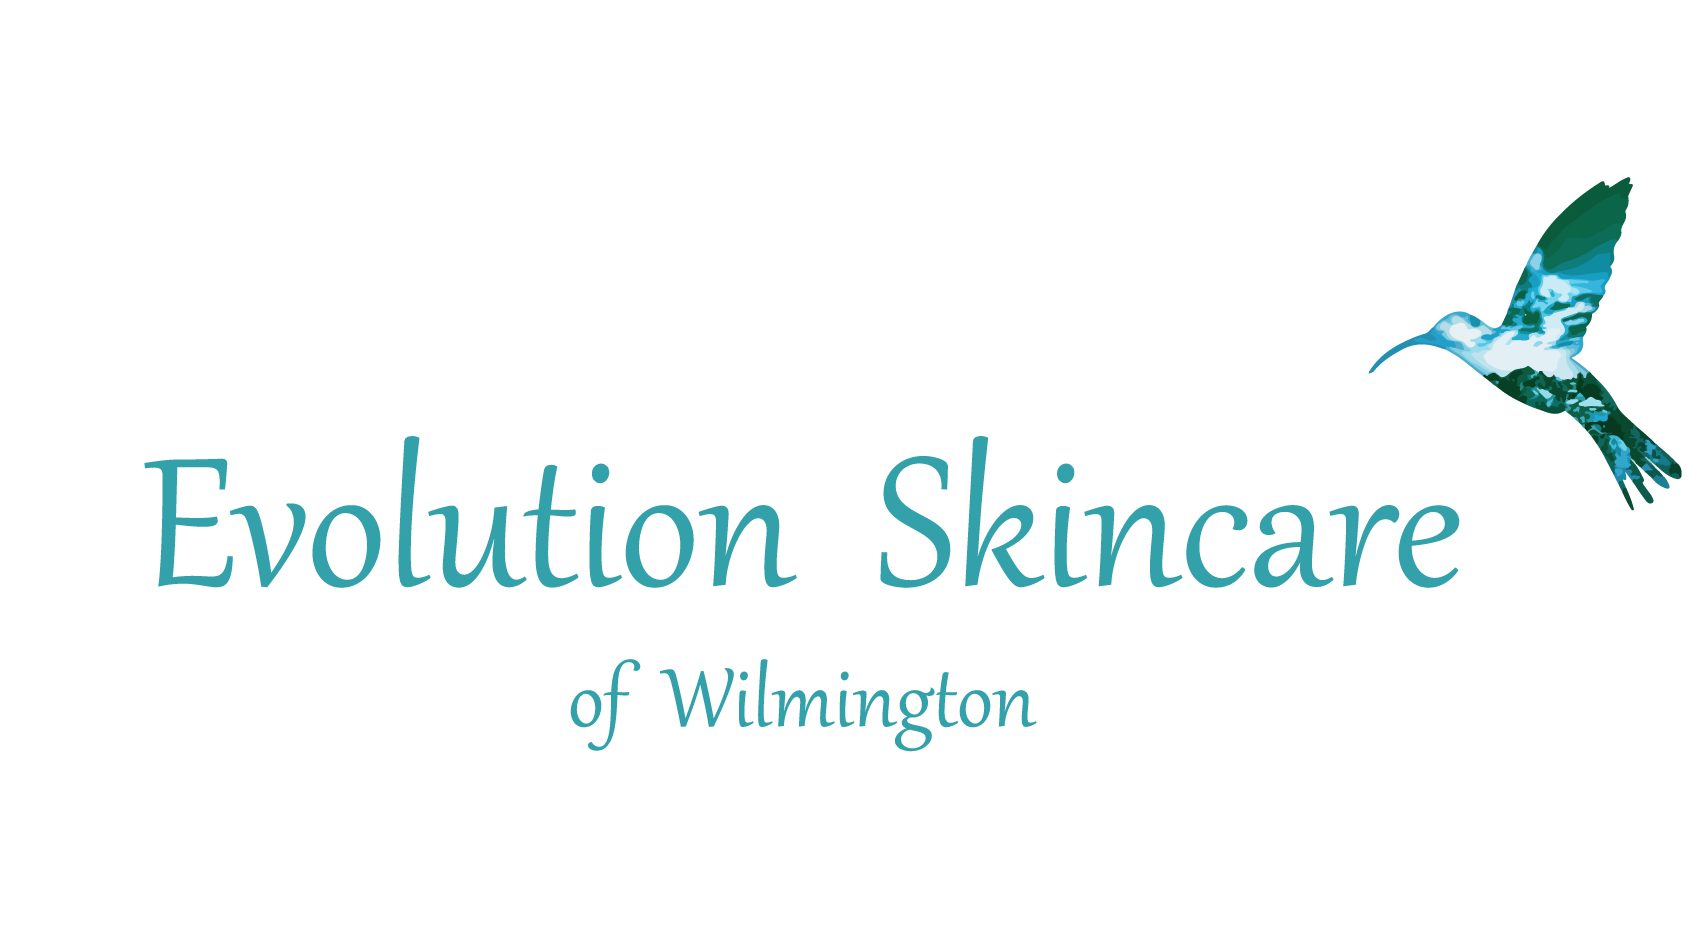 Evolution Skincare of Wilmington - Opened in June 2018!